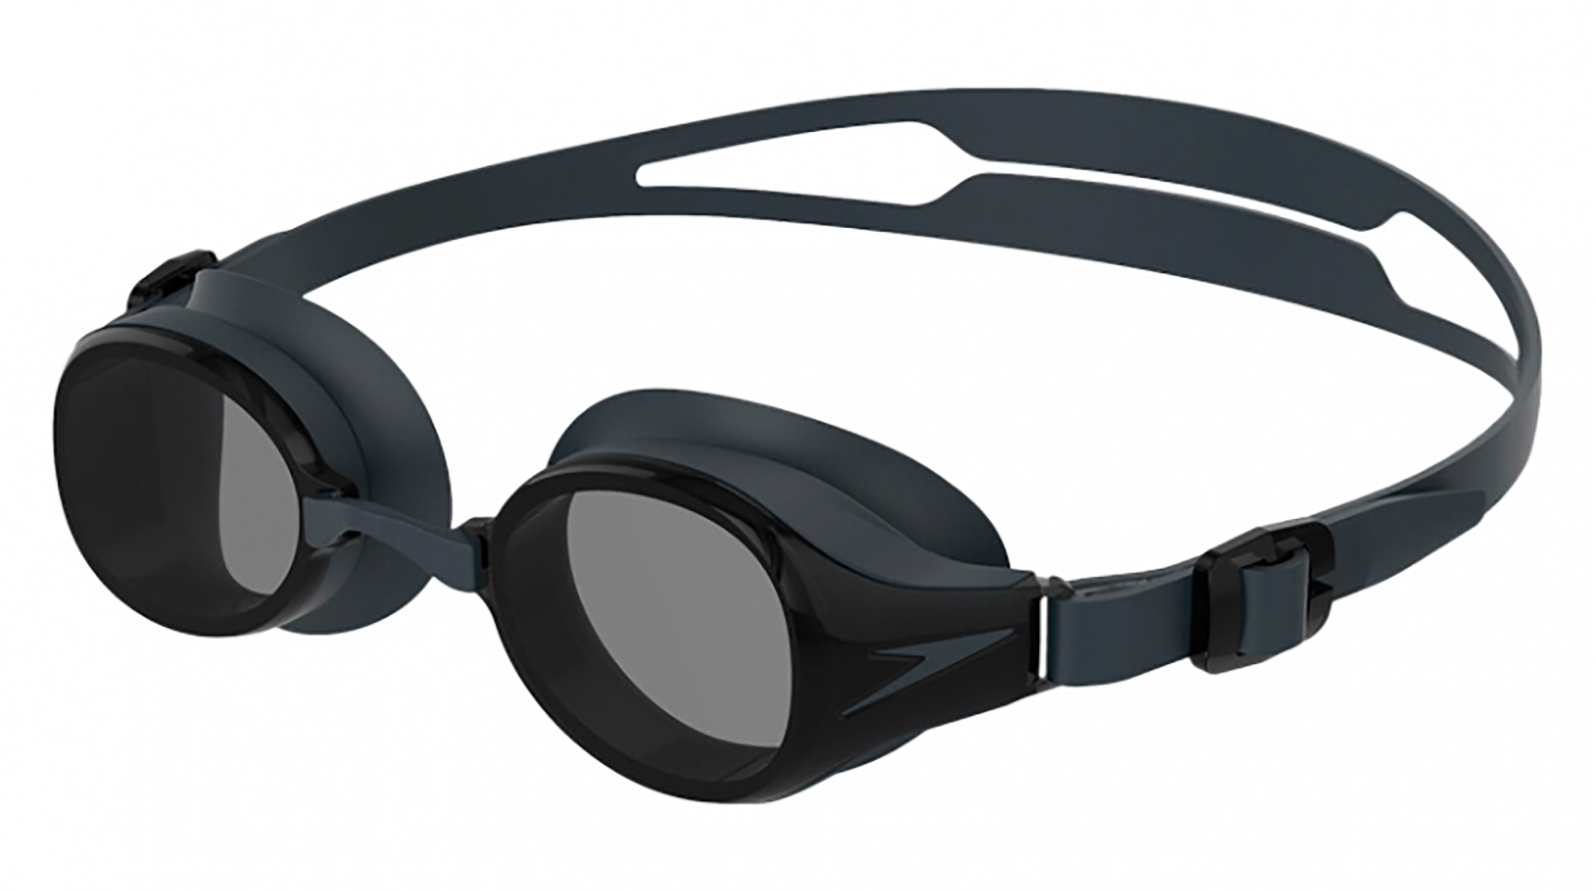 Speedo Очки для плавания Hydropure Optical F808 -3,0 speedo очки для плавания hydropure optical f808 2 5